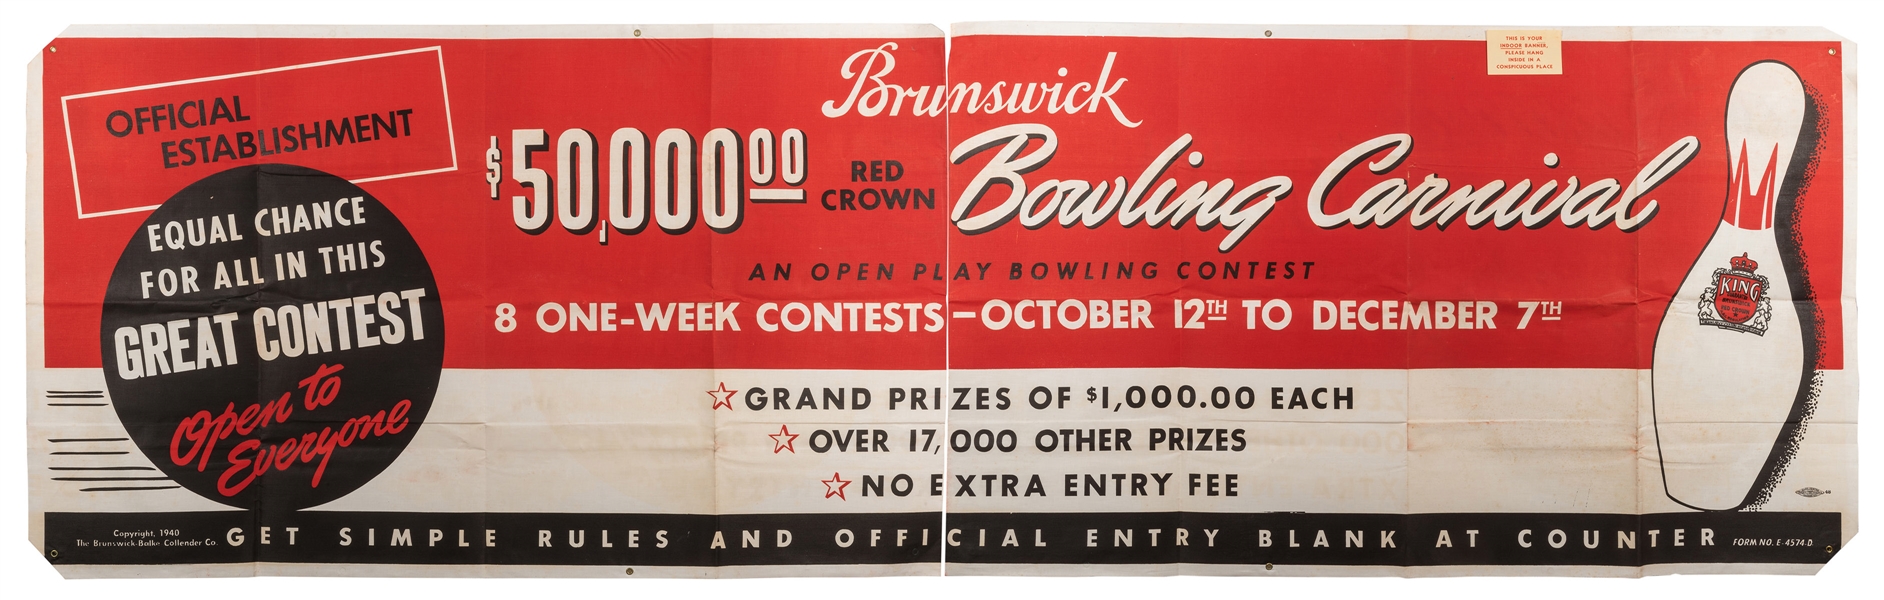 Brunswick Bowling Contest Advertisement Banner.